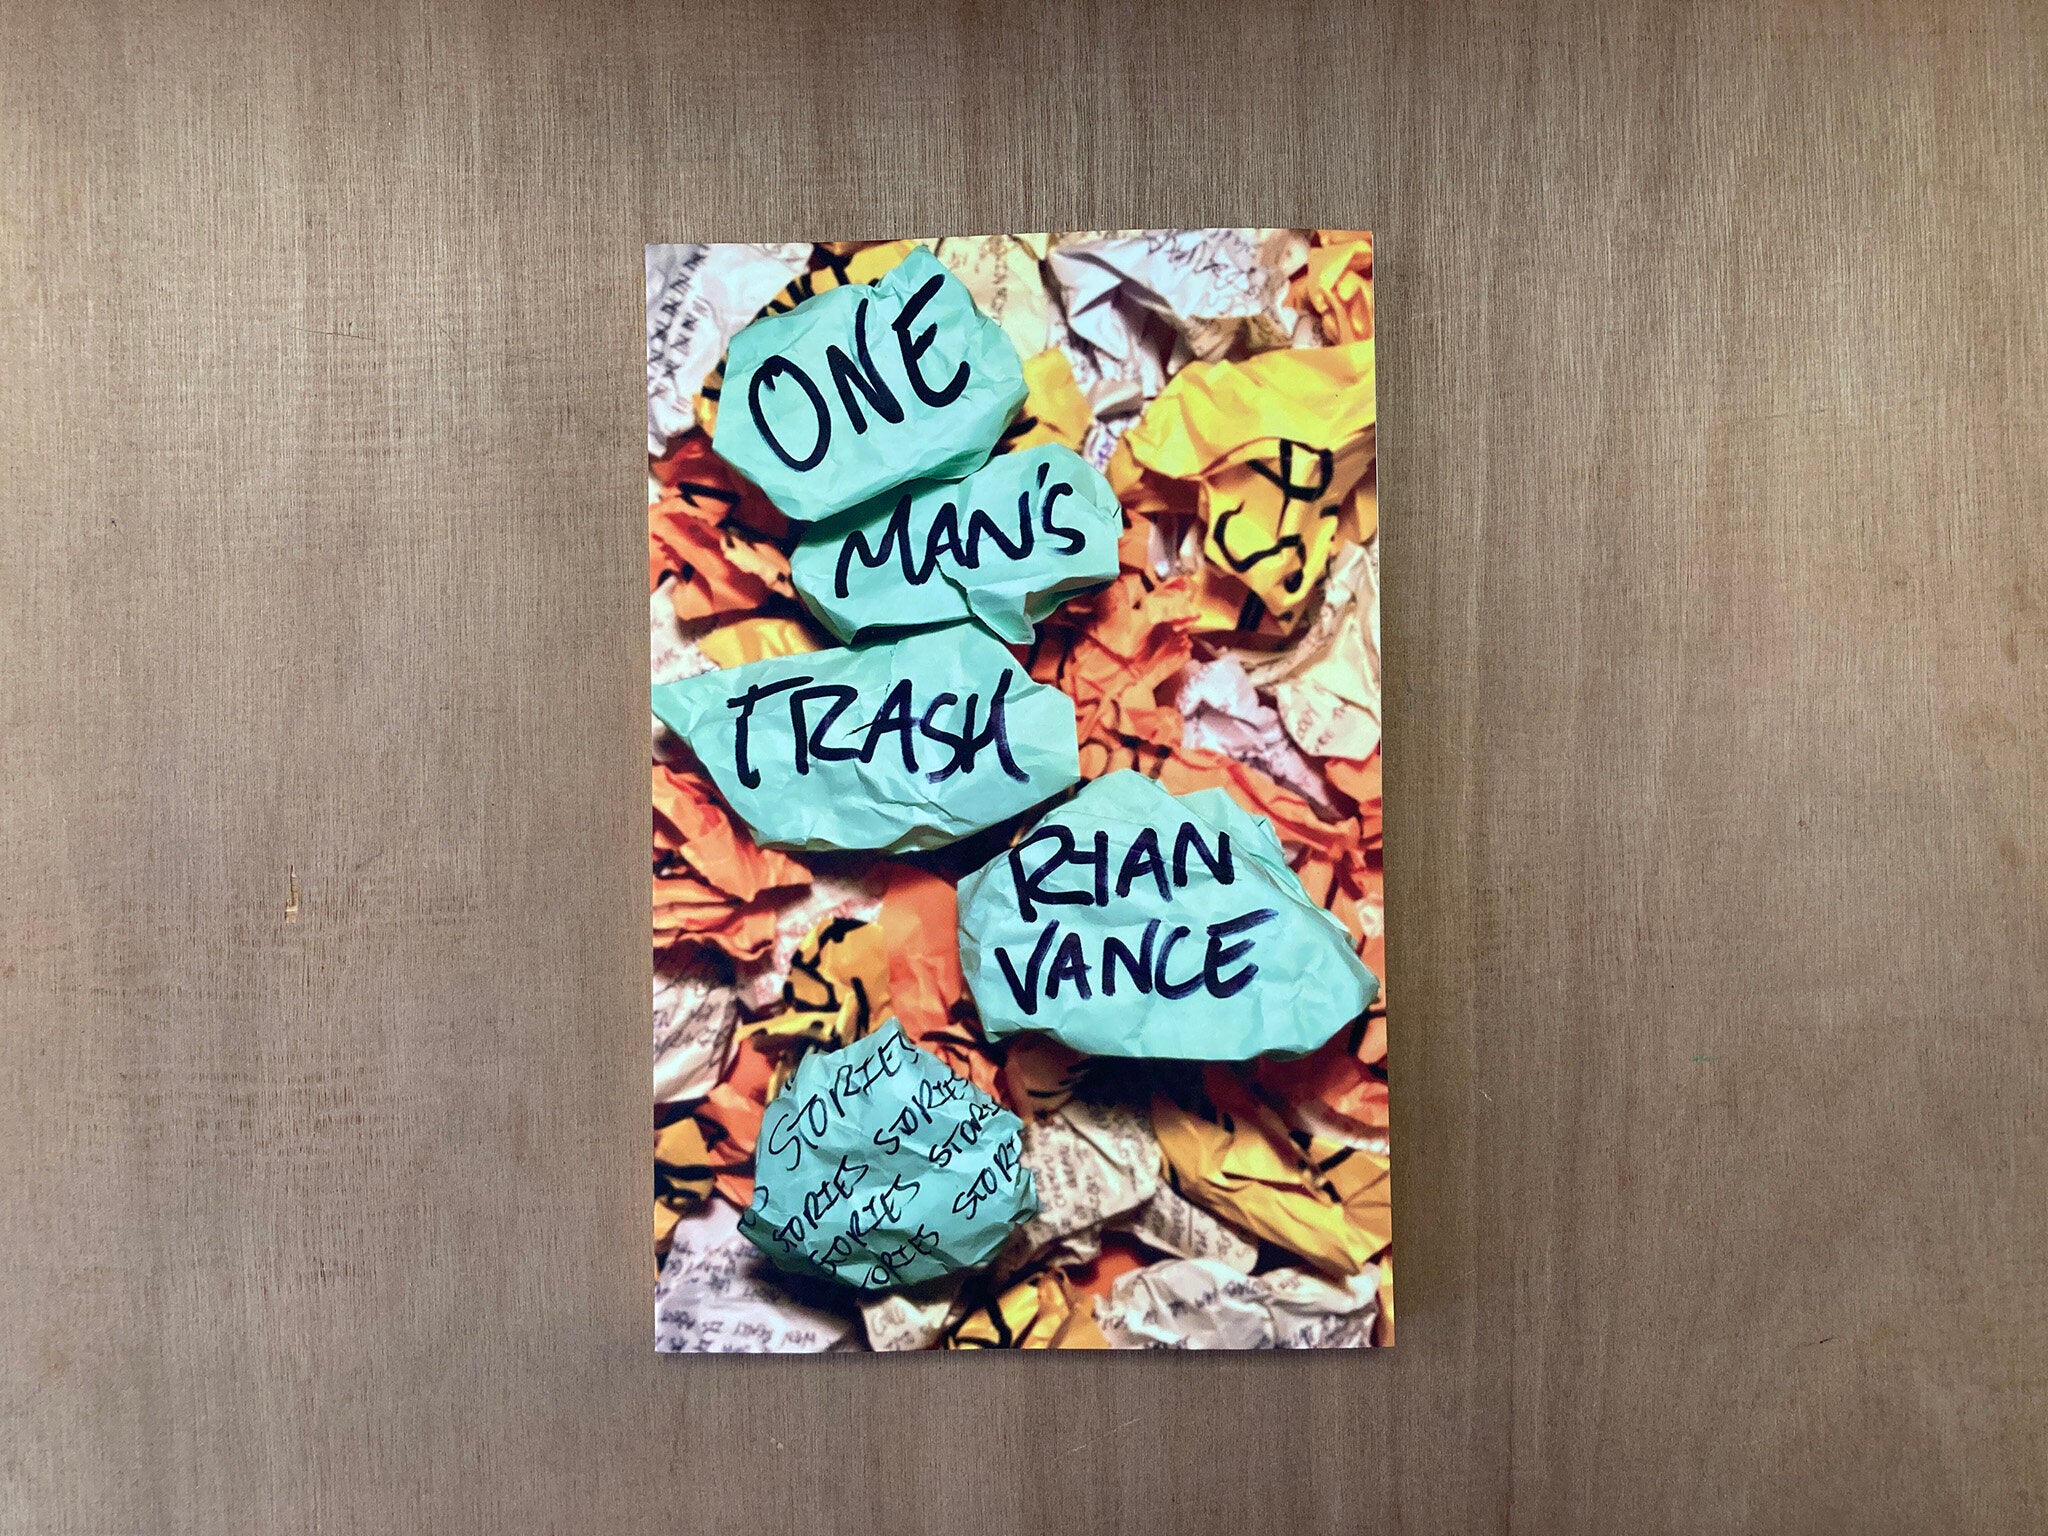 ONE MAN'S TRASH by Ryan Vance